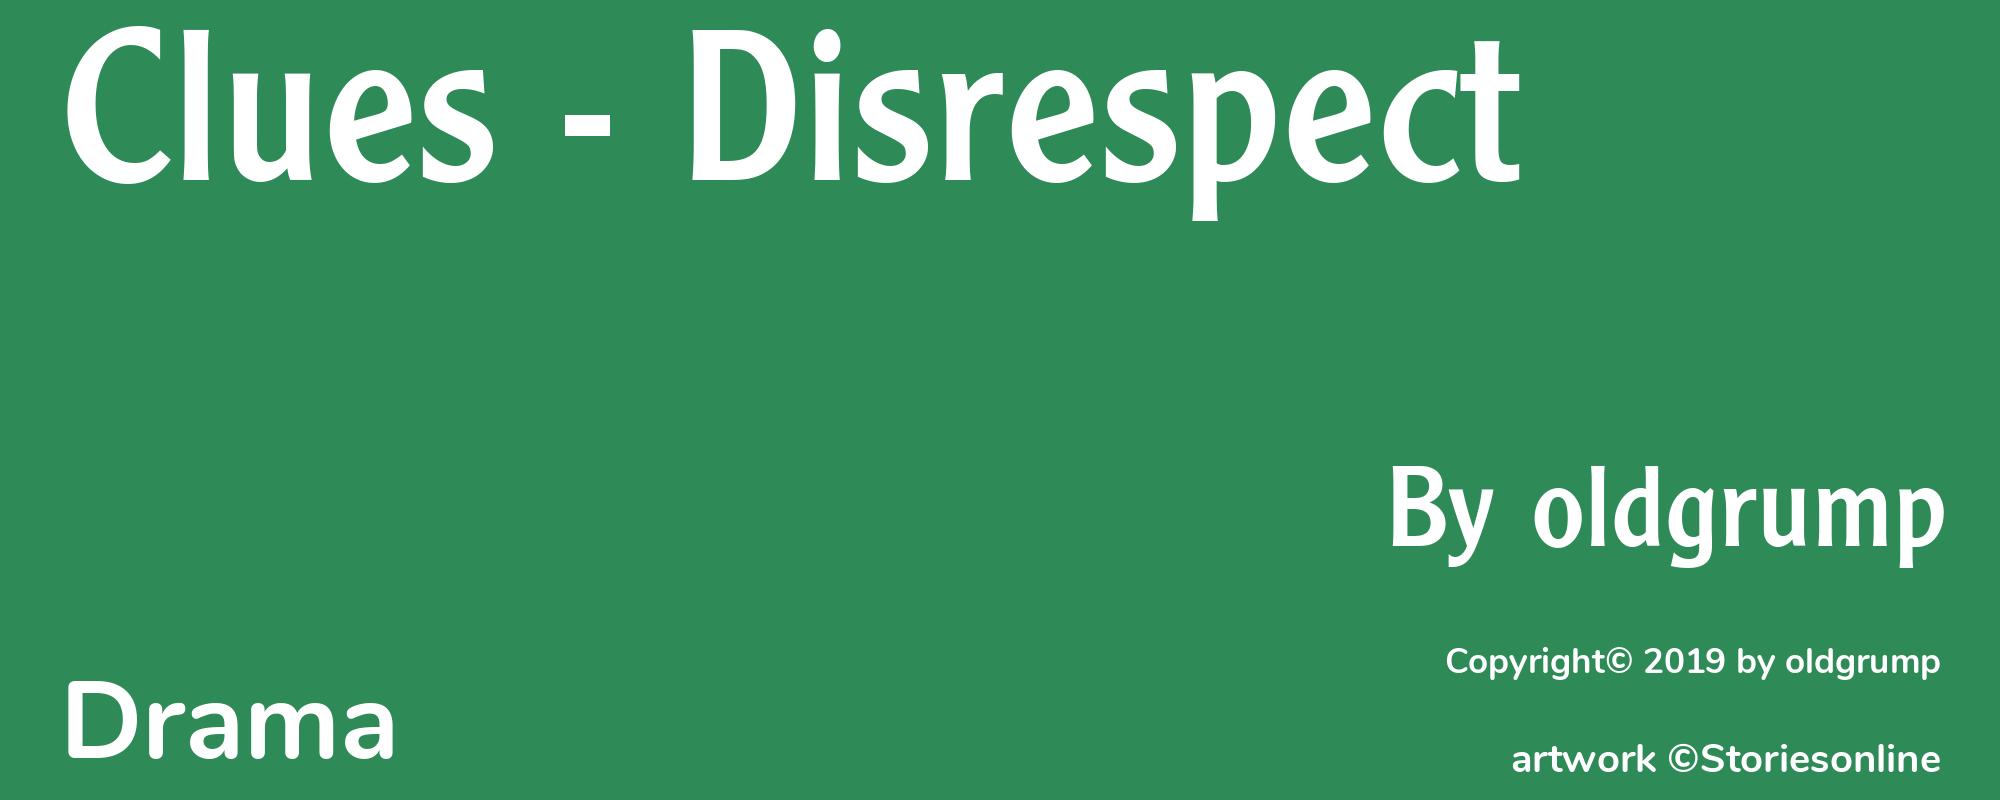 Clues - Disrespect - Cover